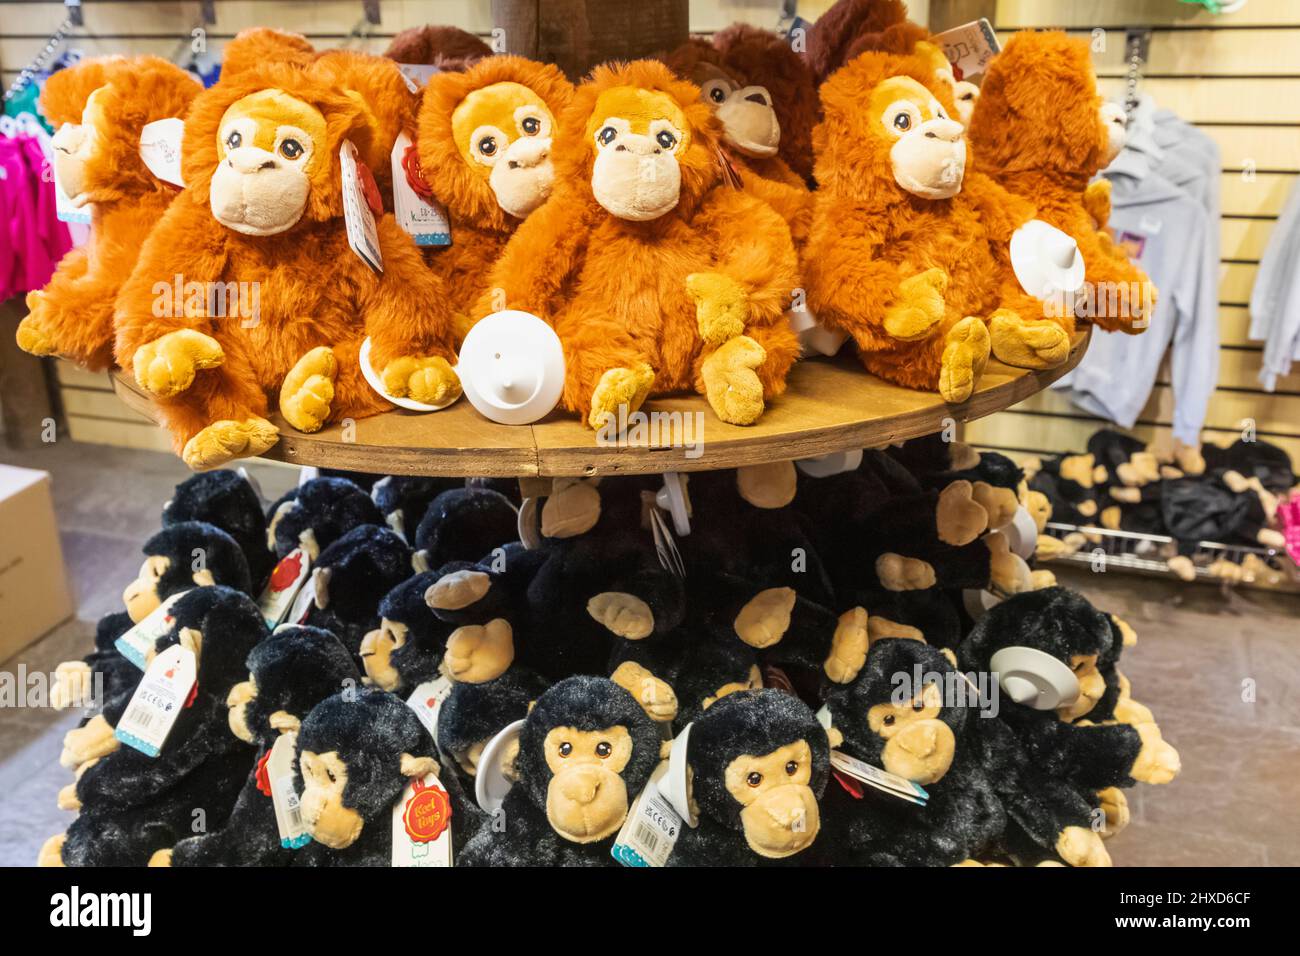 England, Dorset, Monkey World Attraction, Monkey Soft Toys for Sale in Souvenir Shop Stock Photo